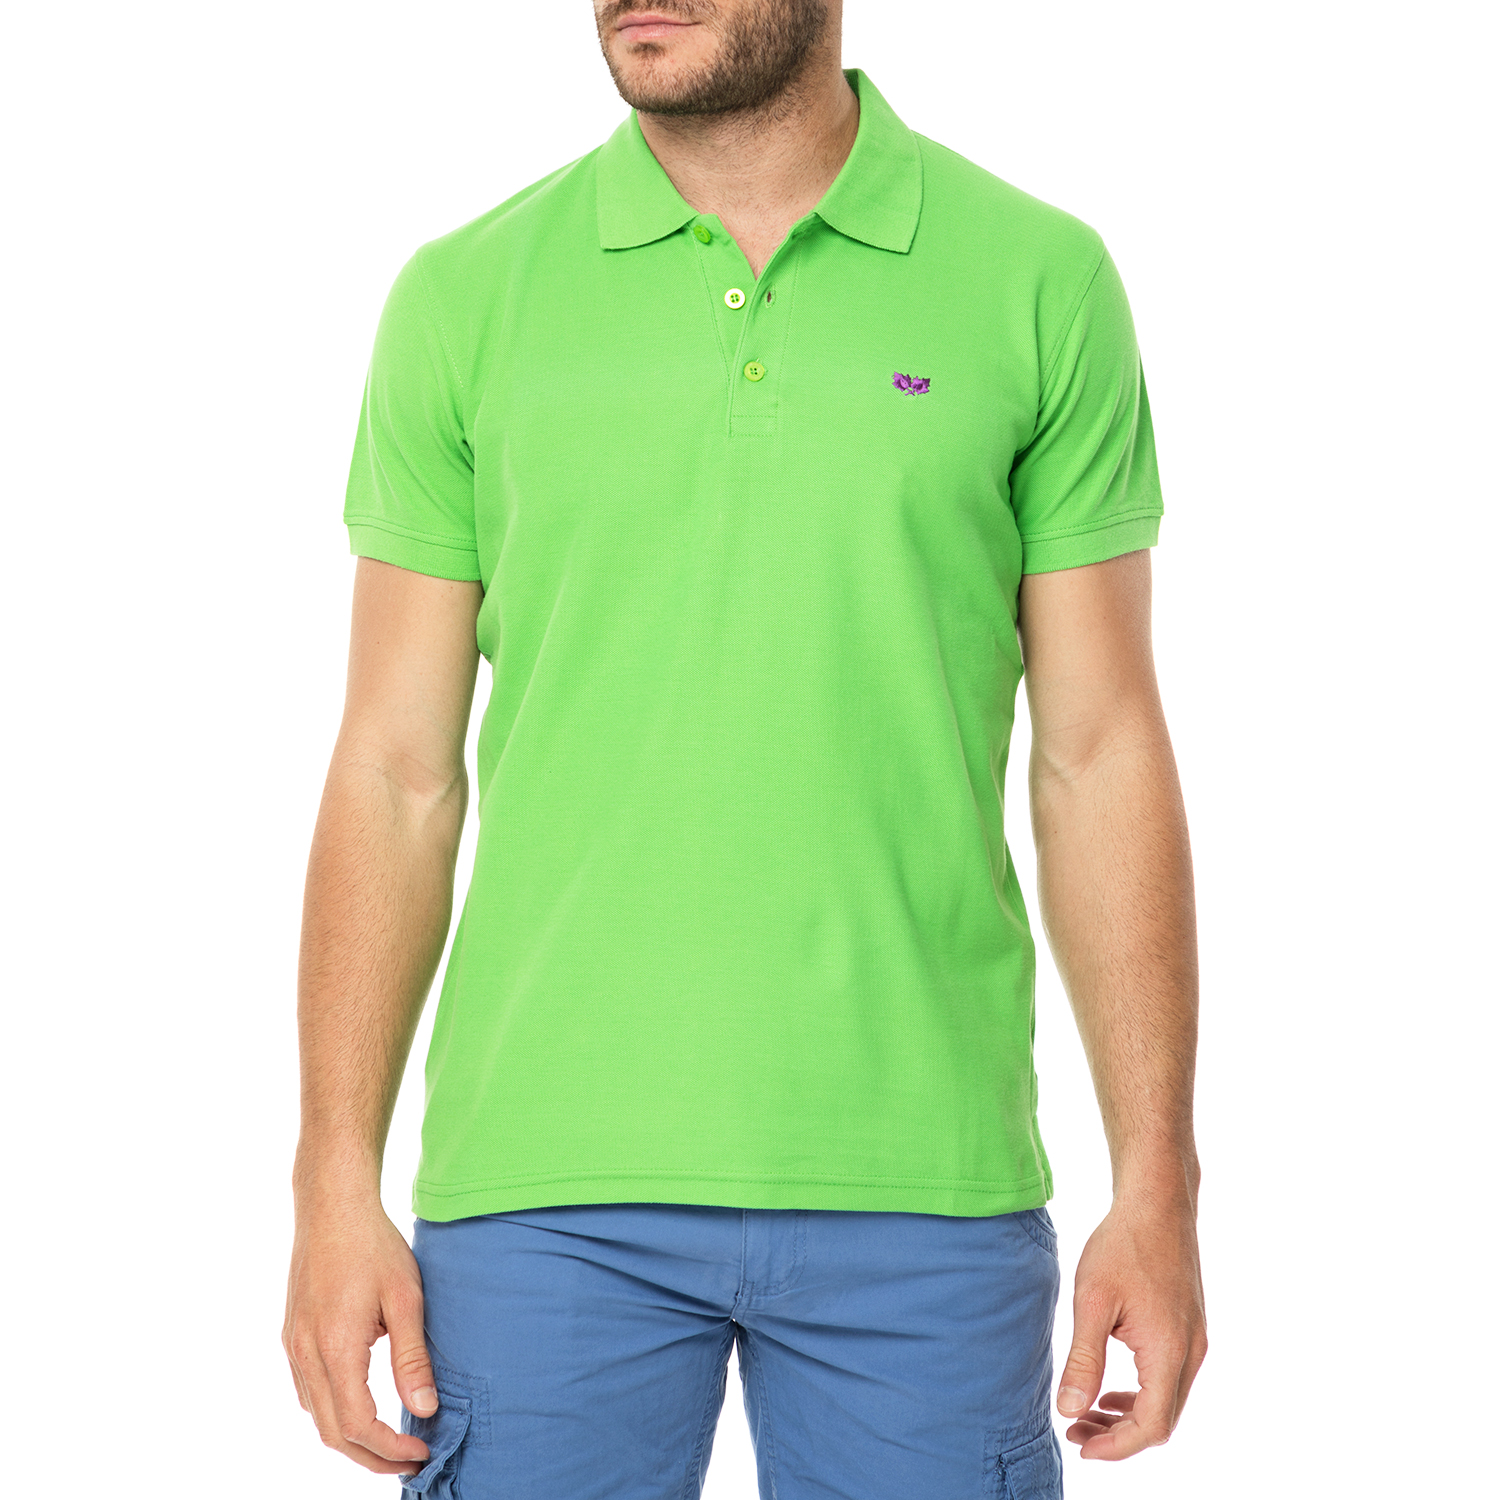 GREENWOOD - Ανδρική πόλο μπλούζα GREENWOOD ανοιχτό πράσινο